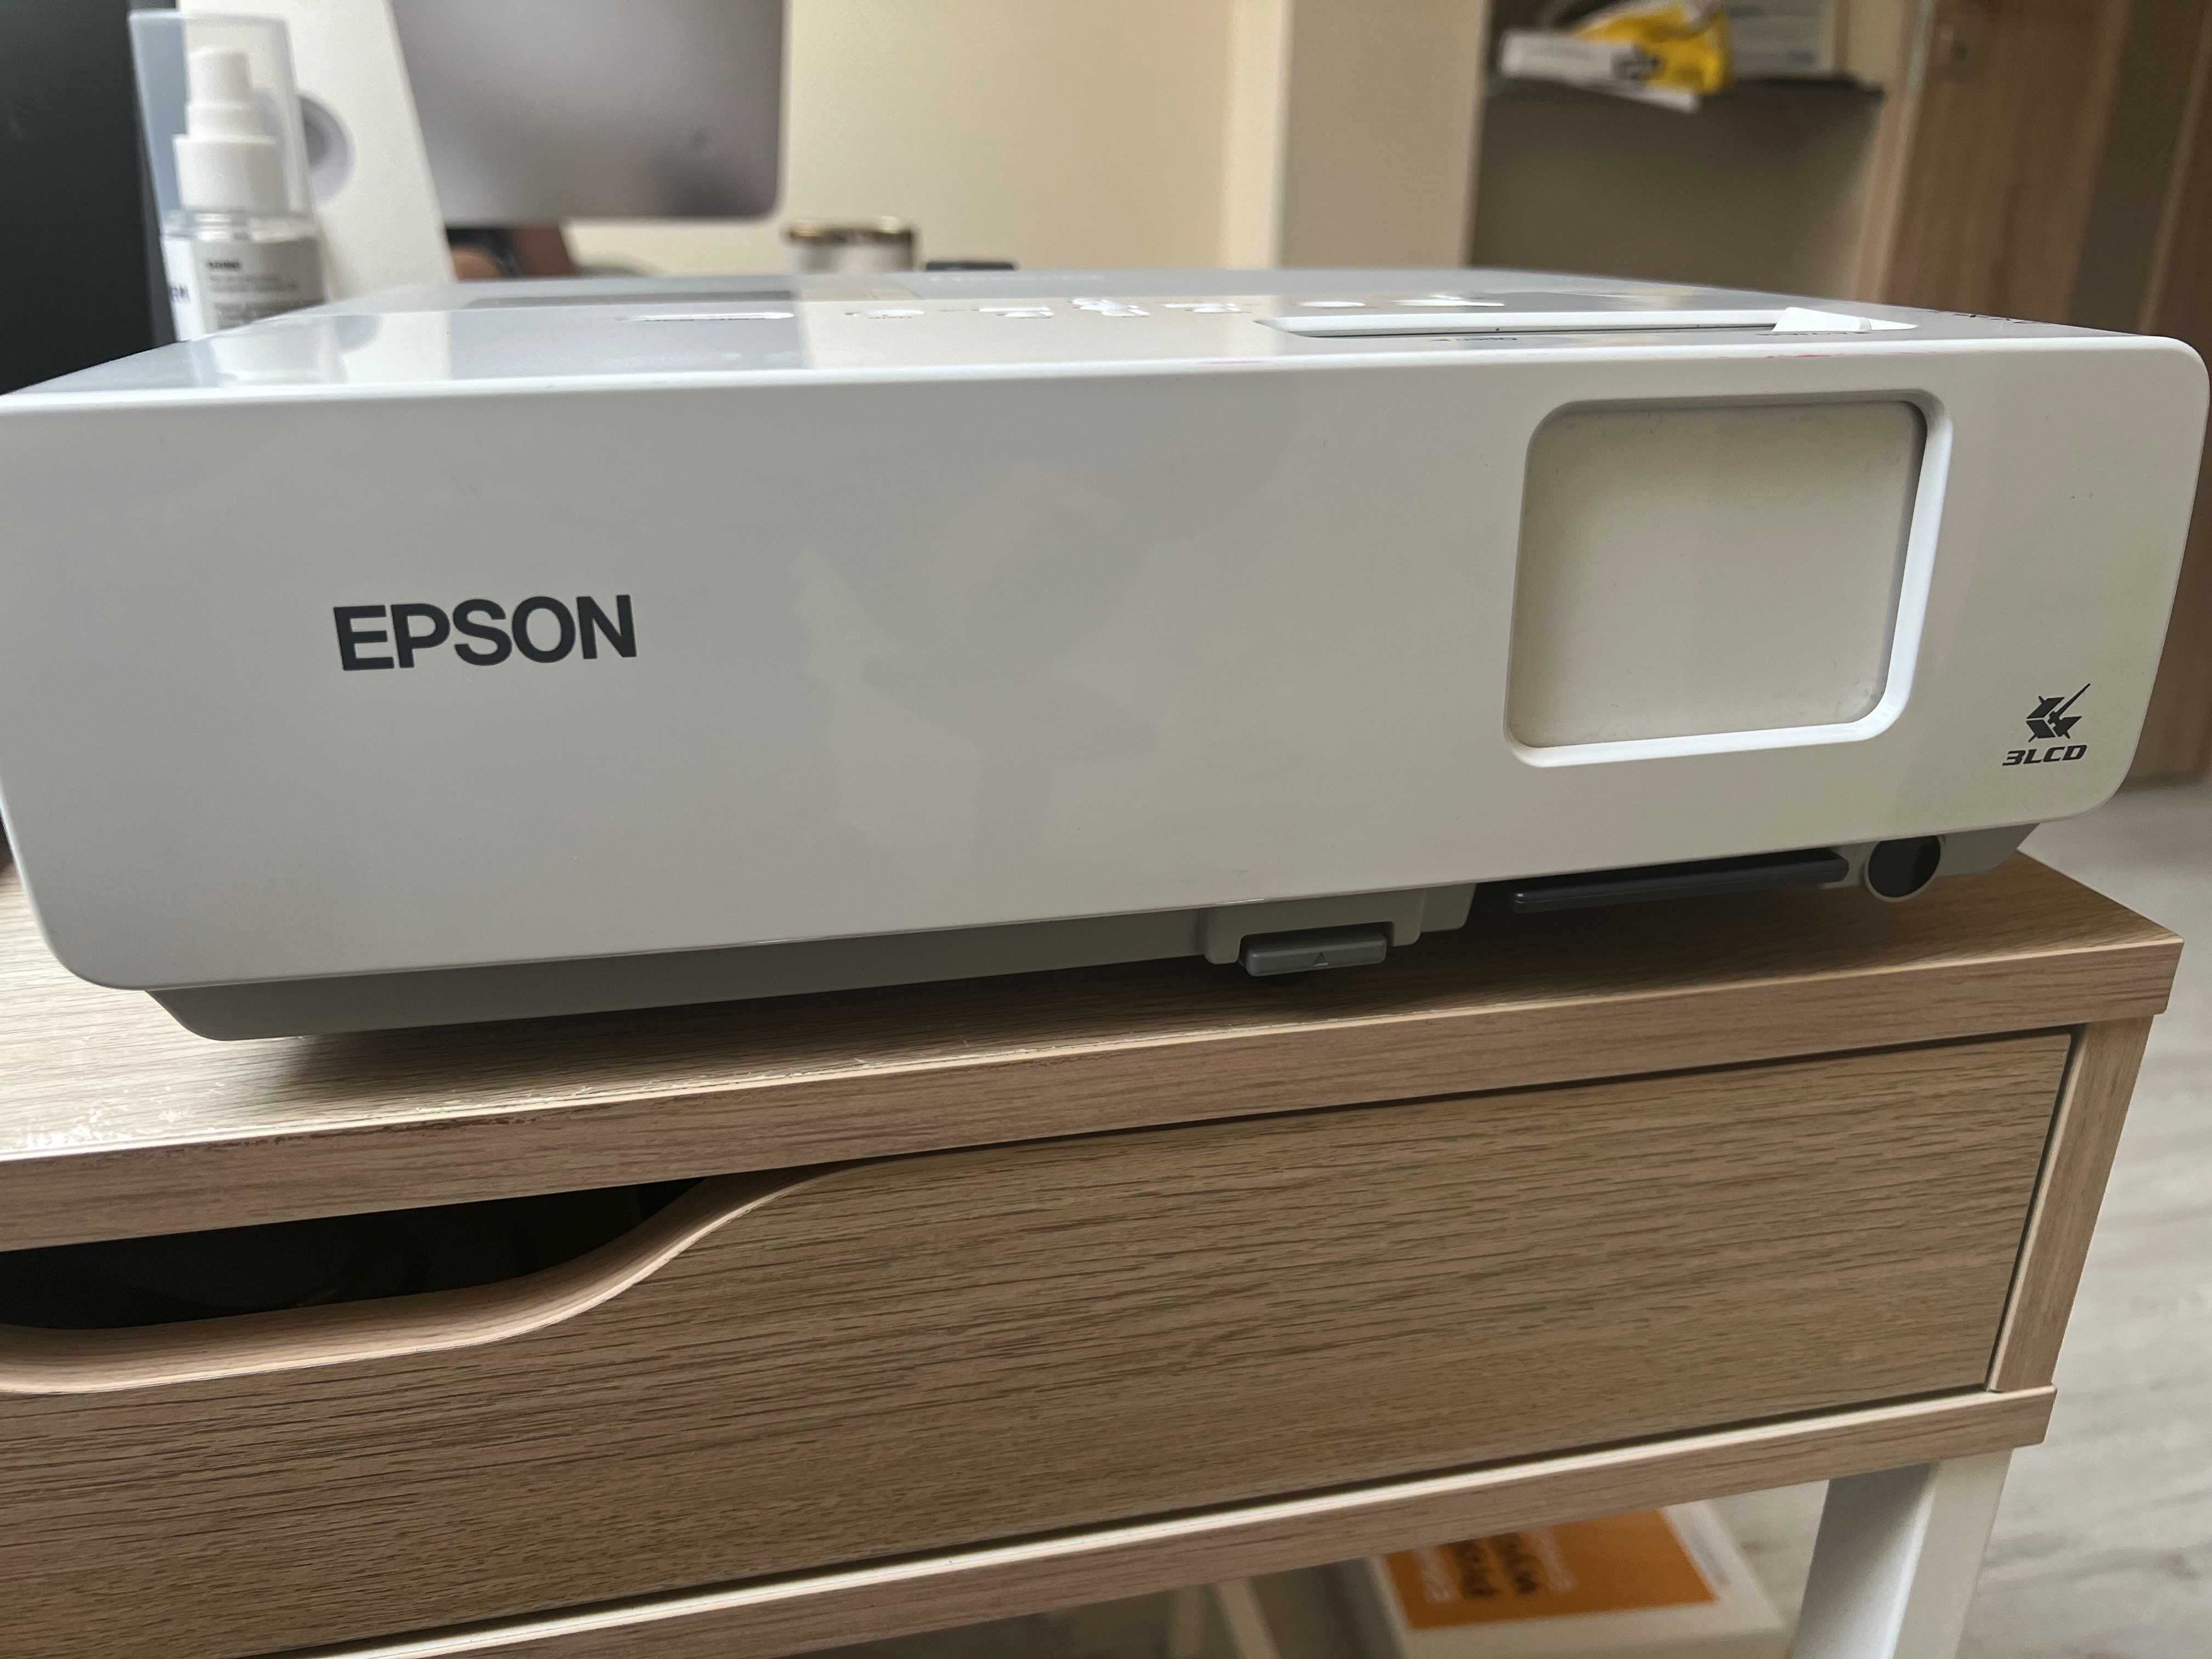 Projektor multimedialny EPSON EMP-83H